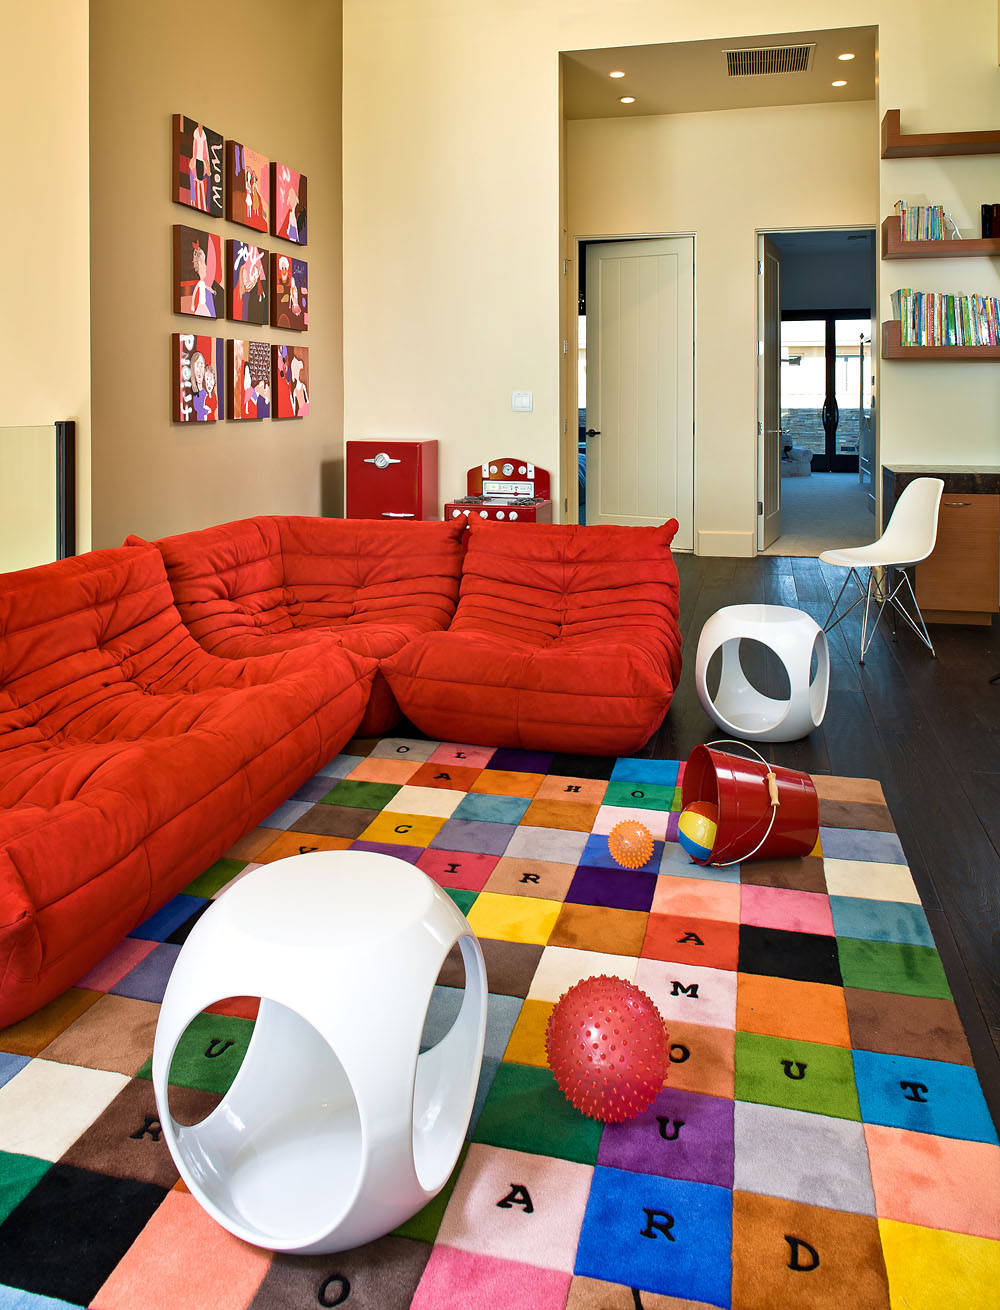 Разноцветная детская комната